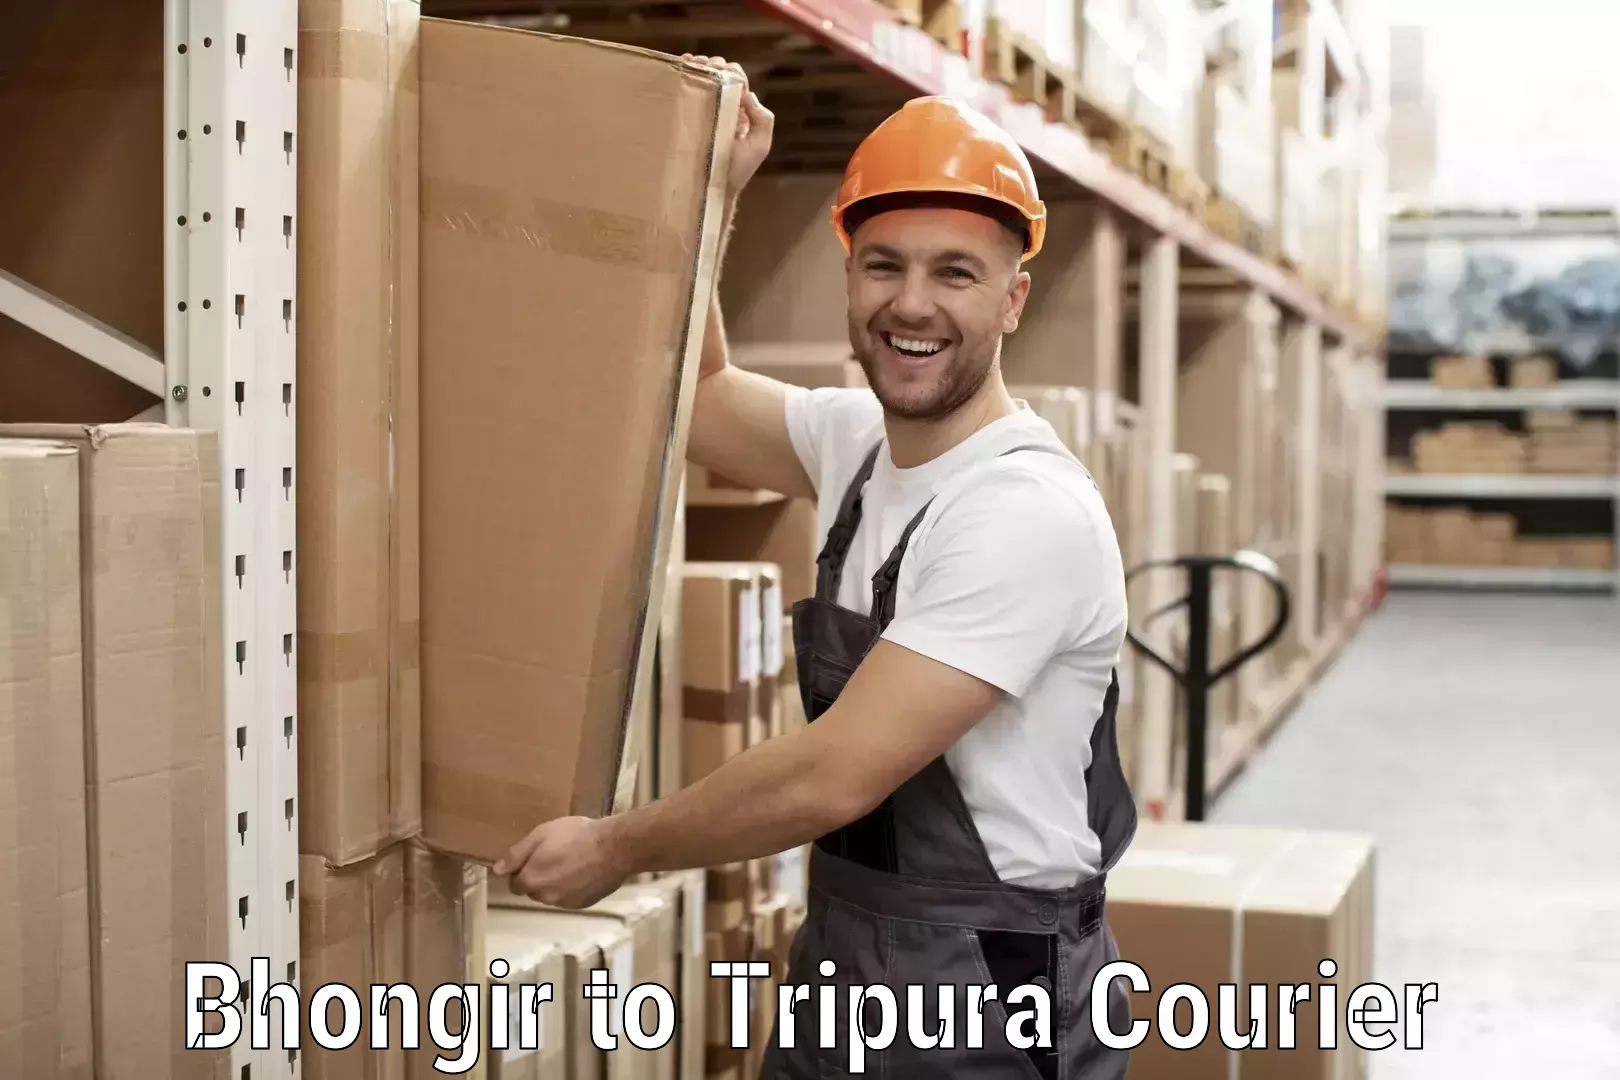 Courier service comparison Bhongir to Tripura